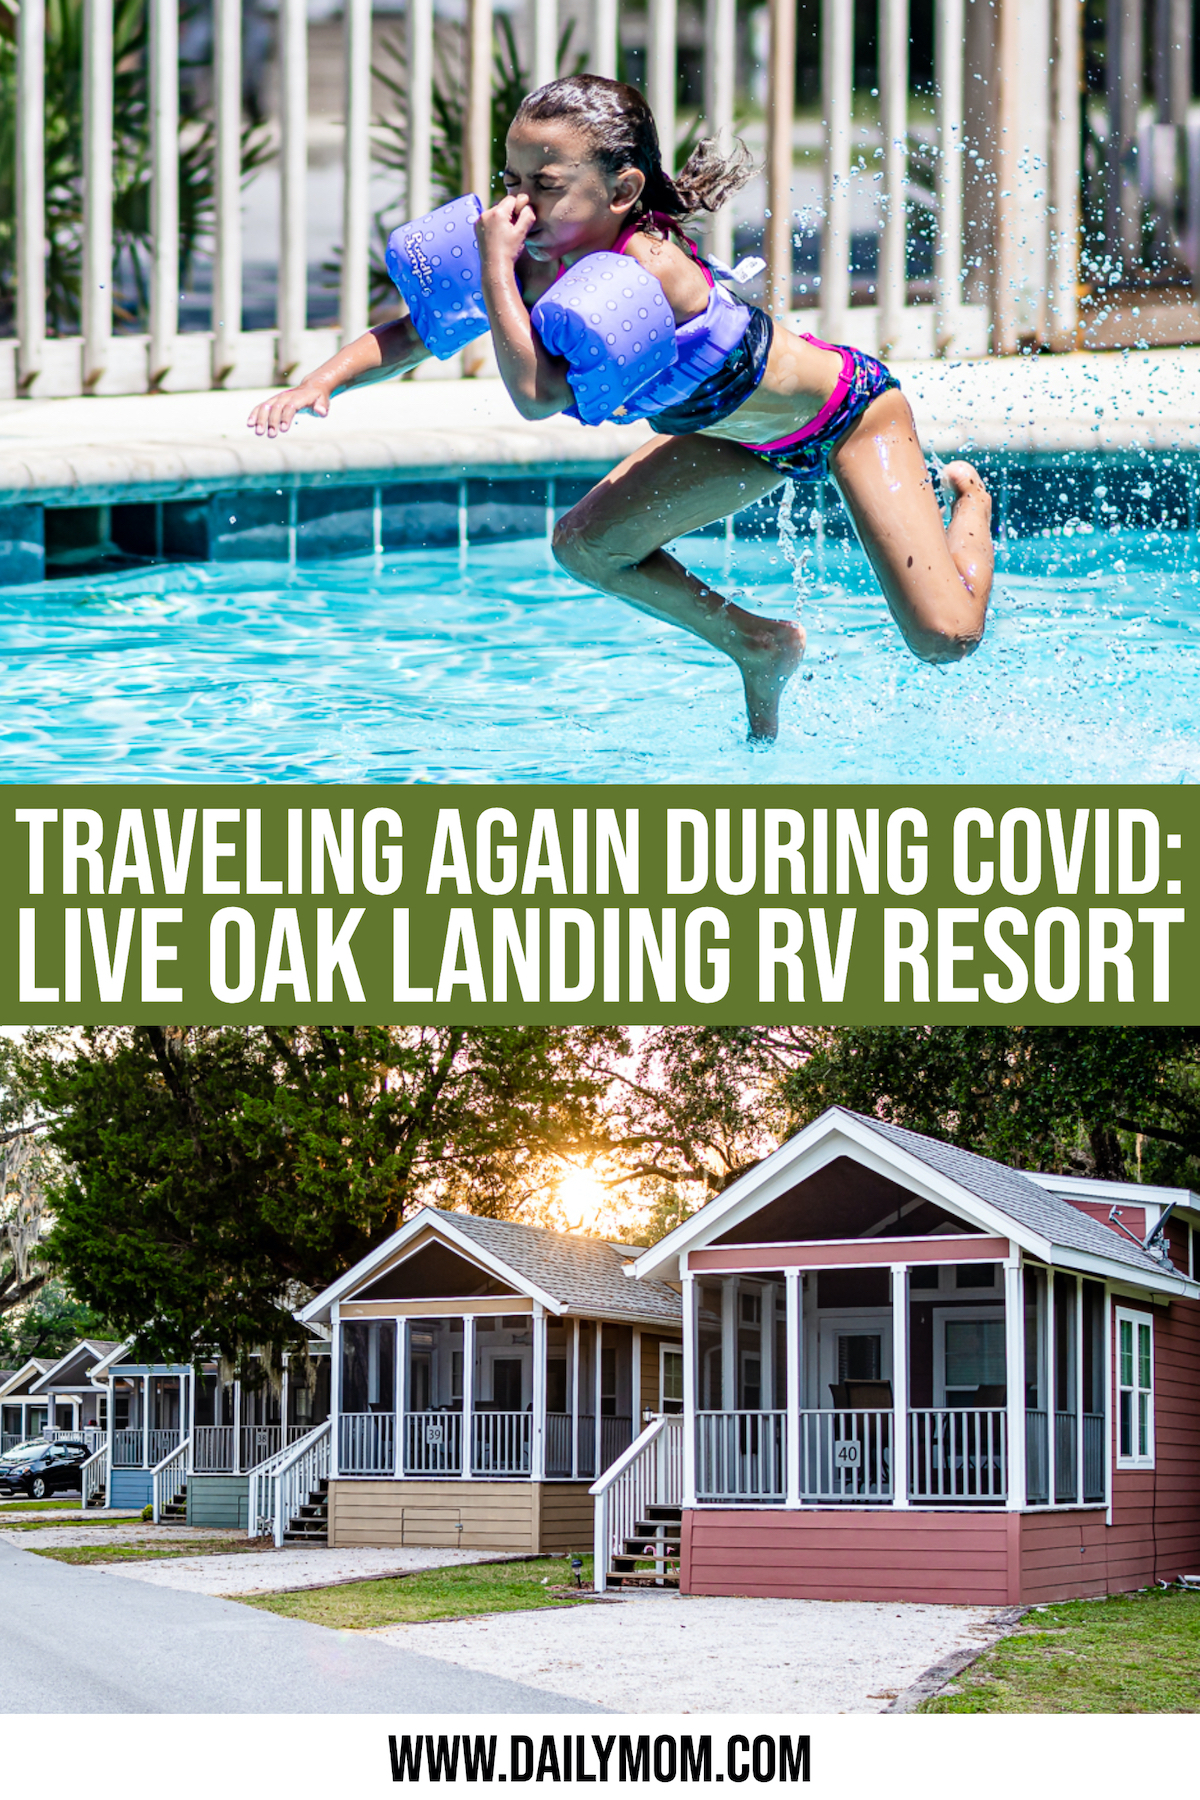 Live Oak Landing Vacation: Rv Resort In Florida During Covid-19